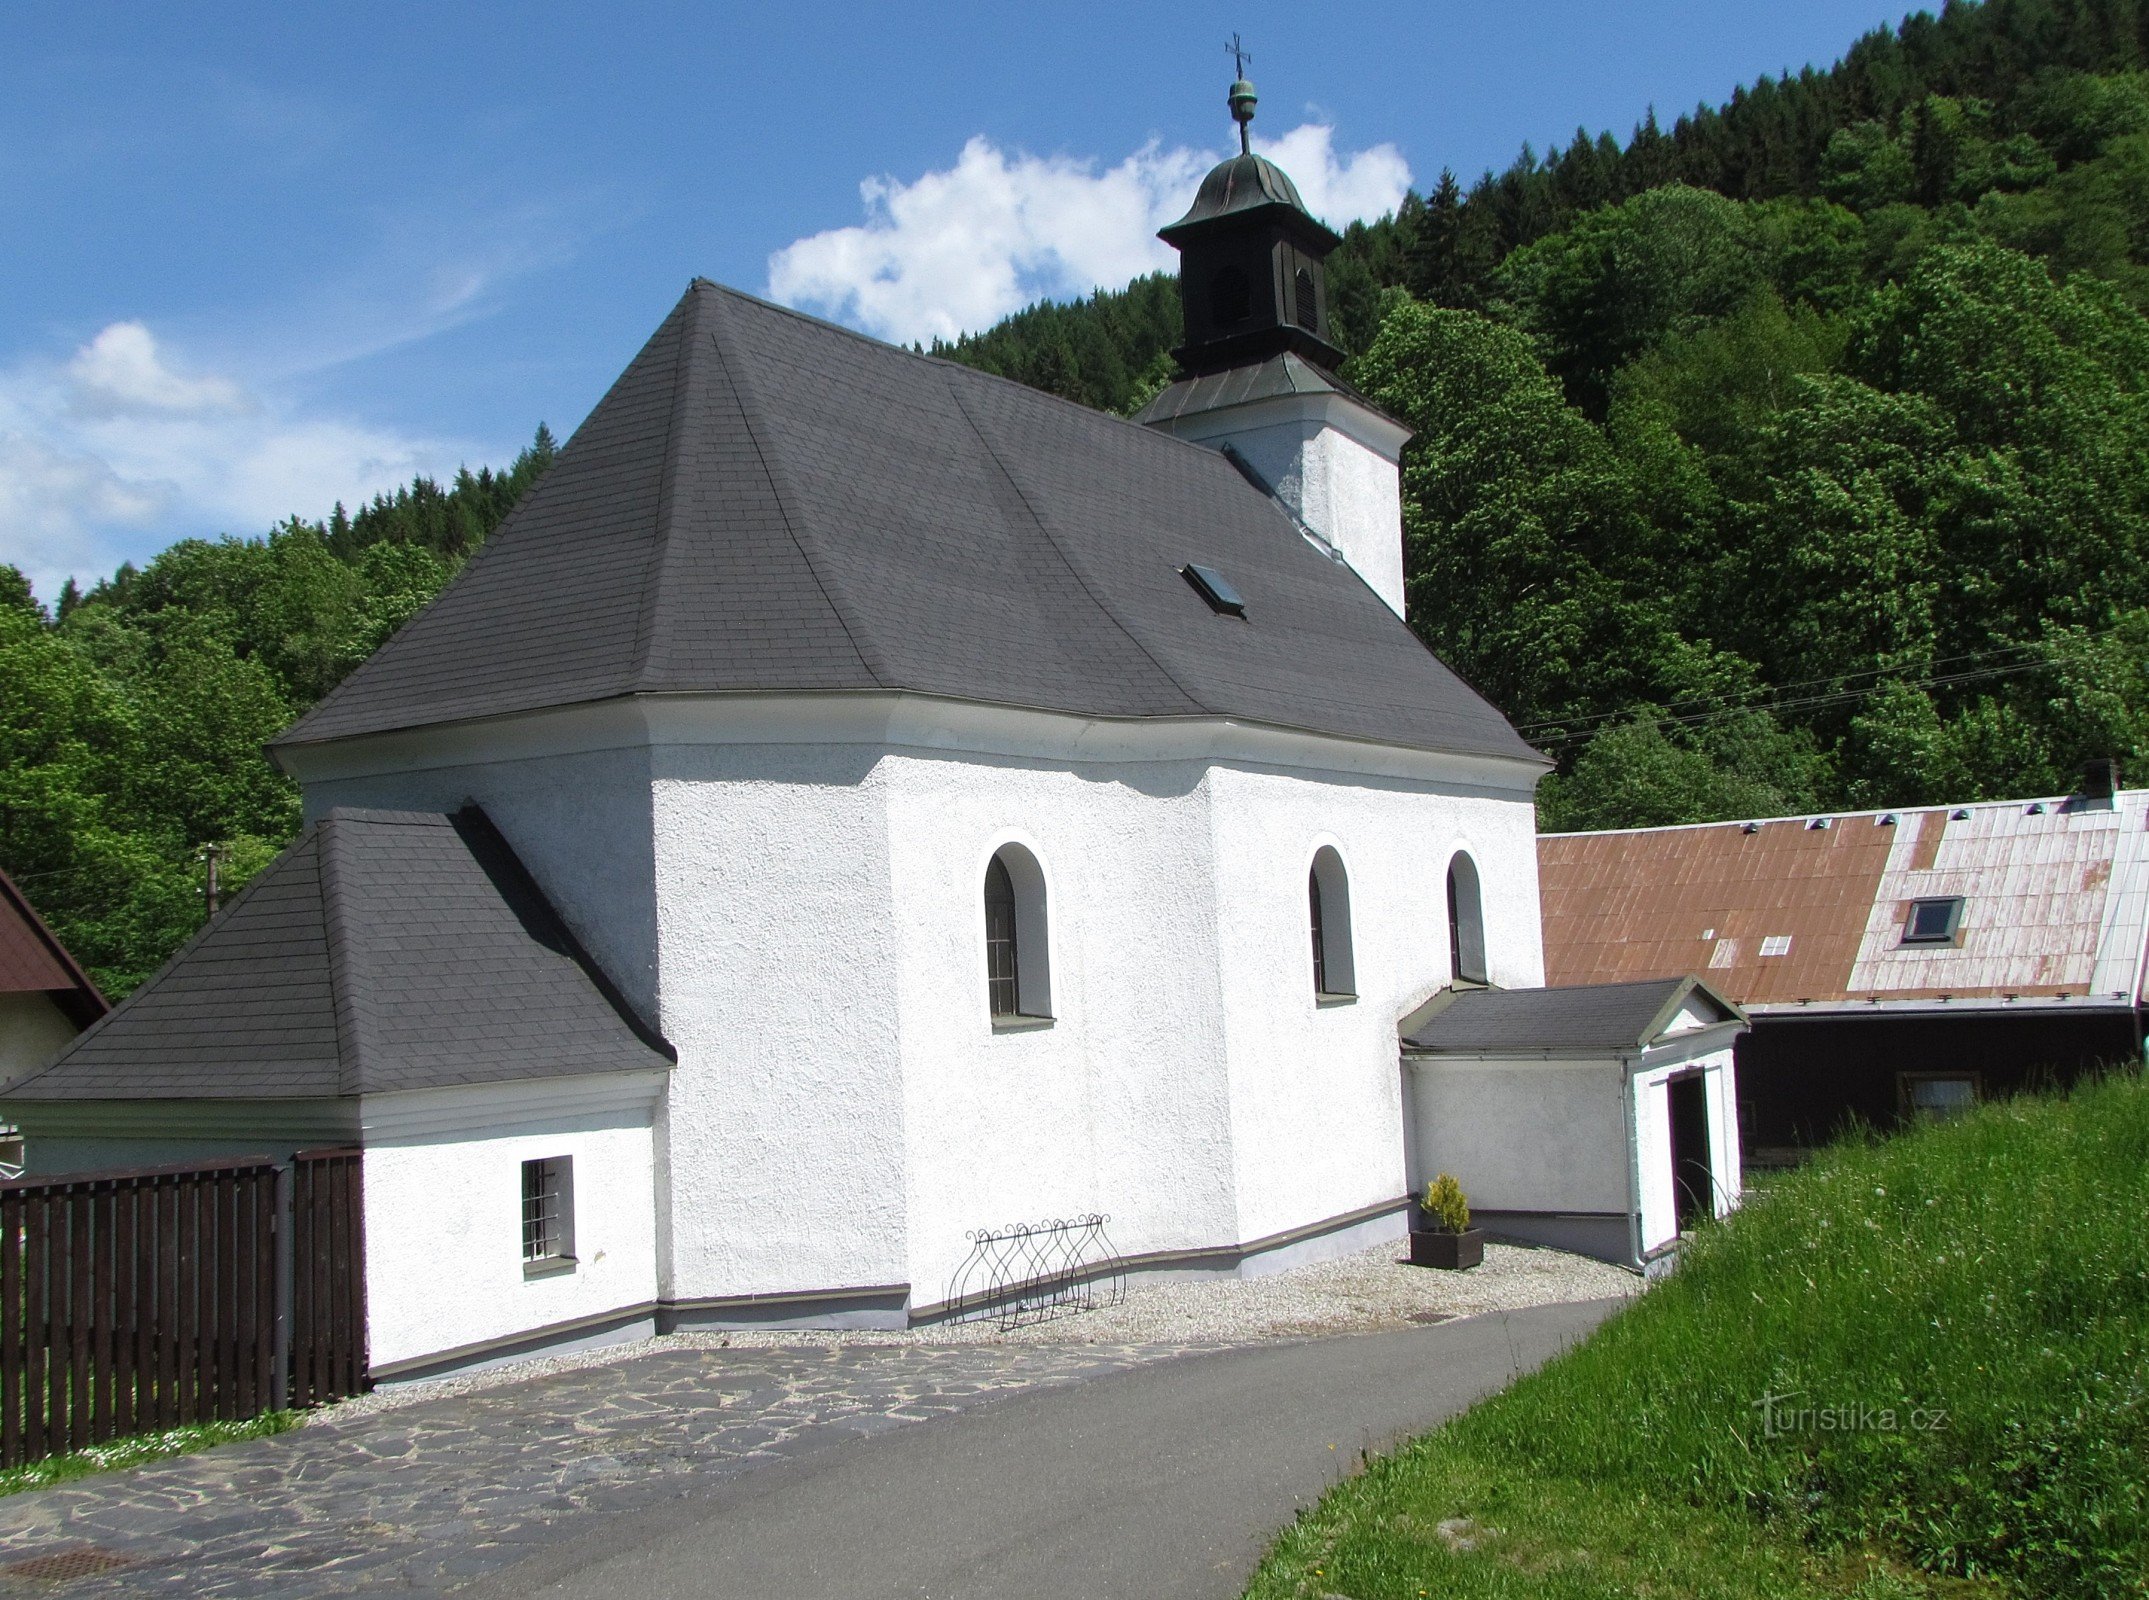 Ludvíkov - Biserica Vizita Fecioarei Maria